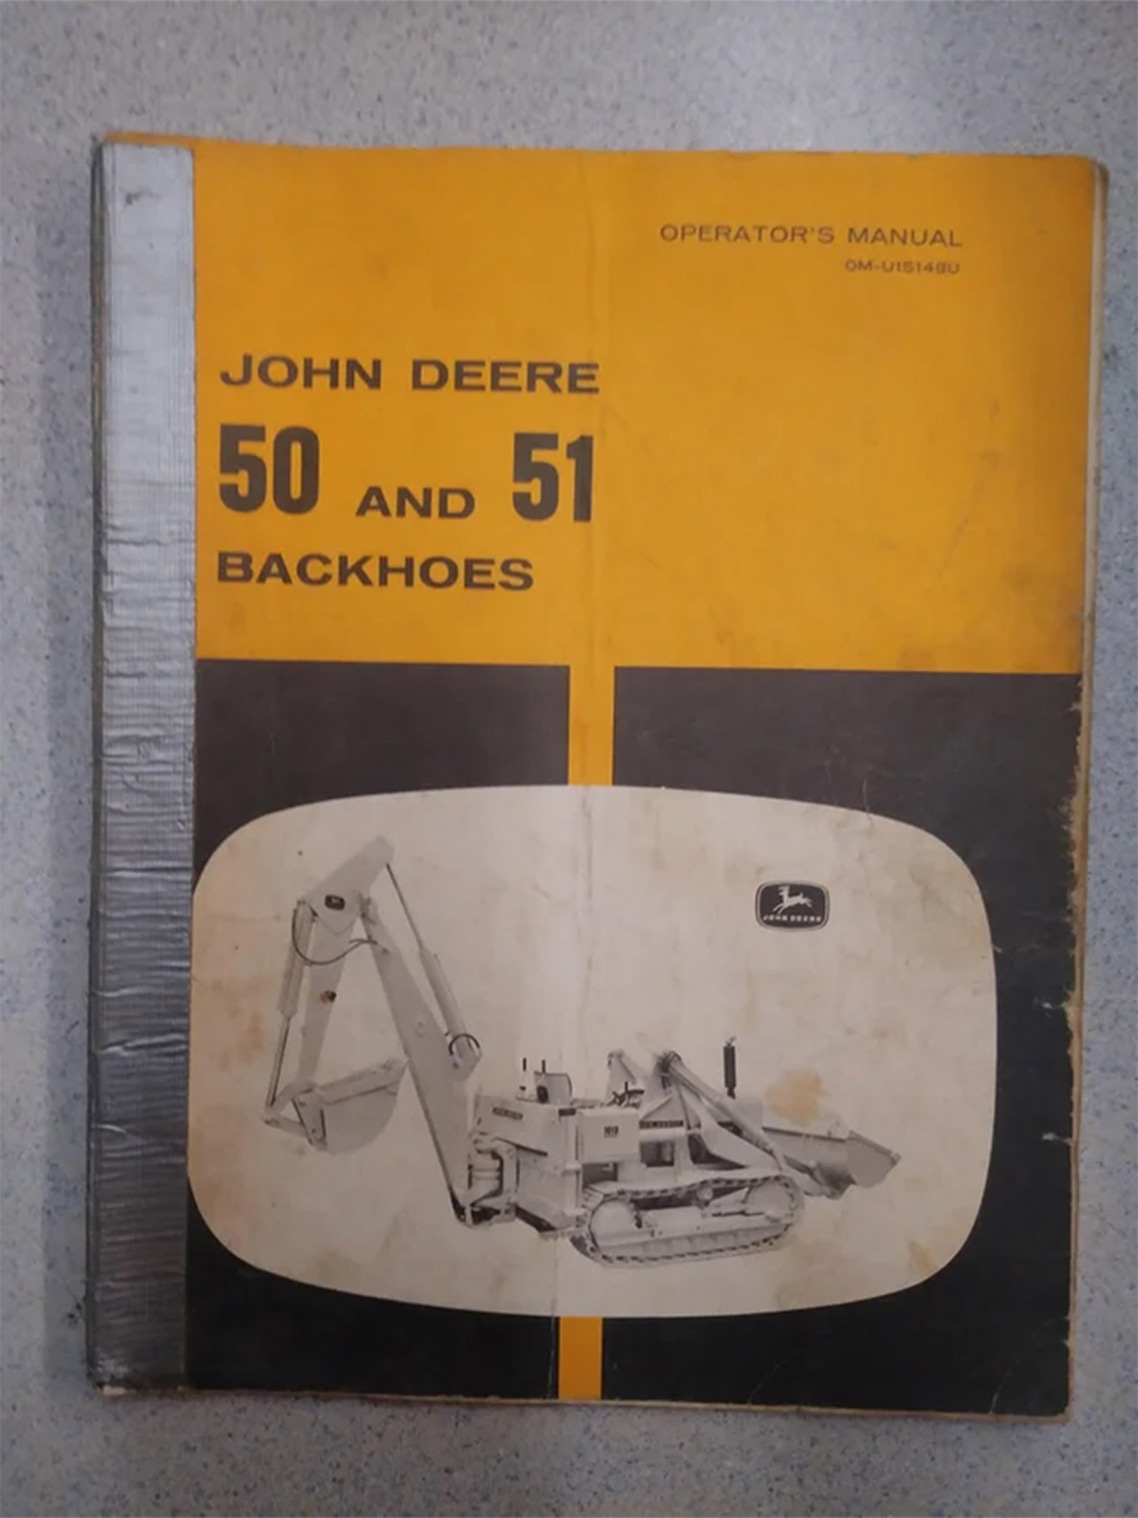 John Deere 50 and 51 Backhoes Operator's Manual